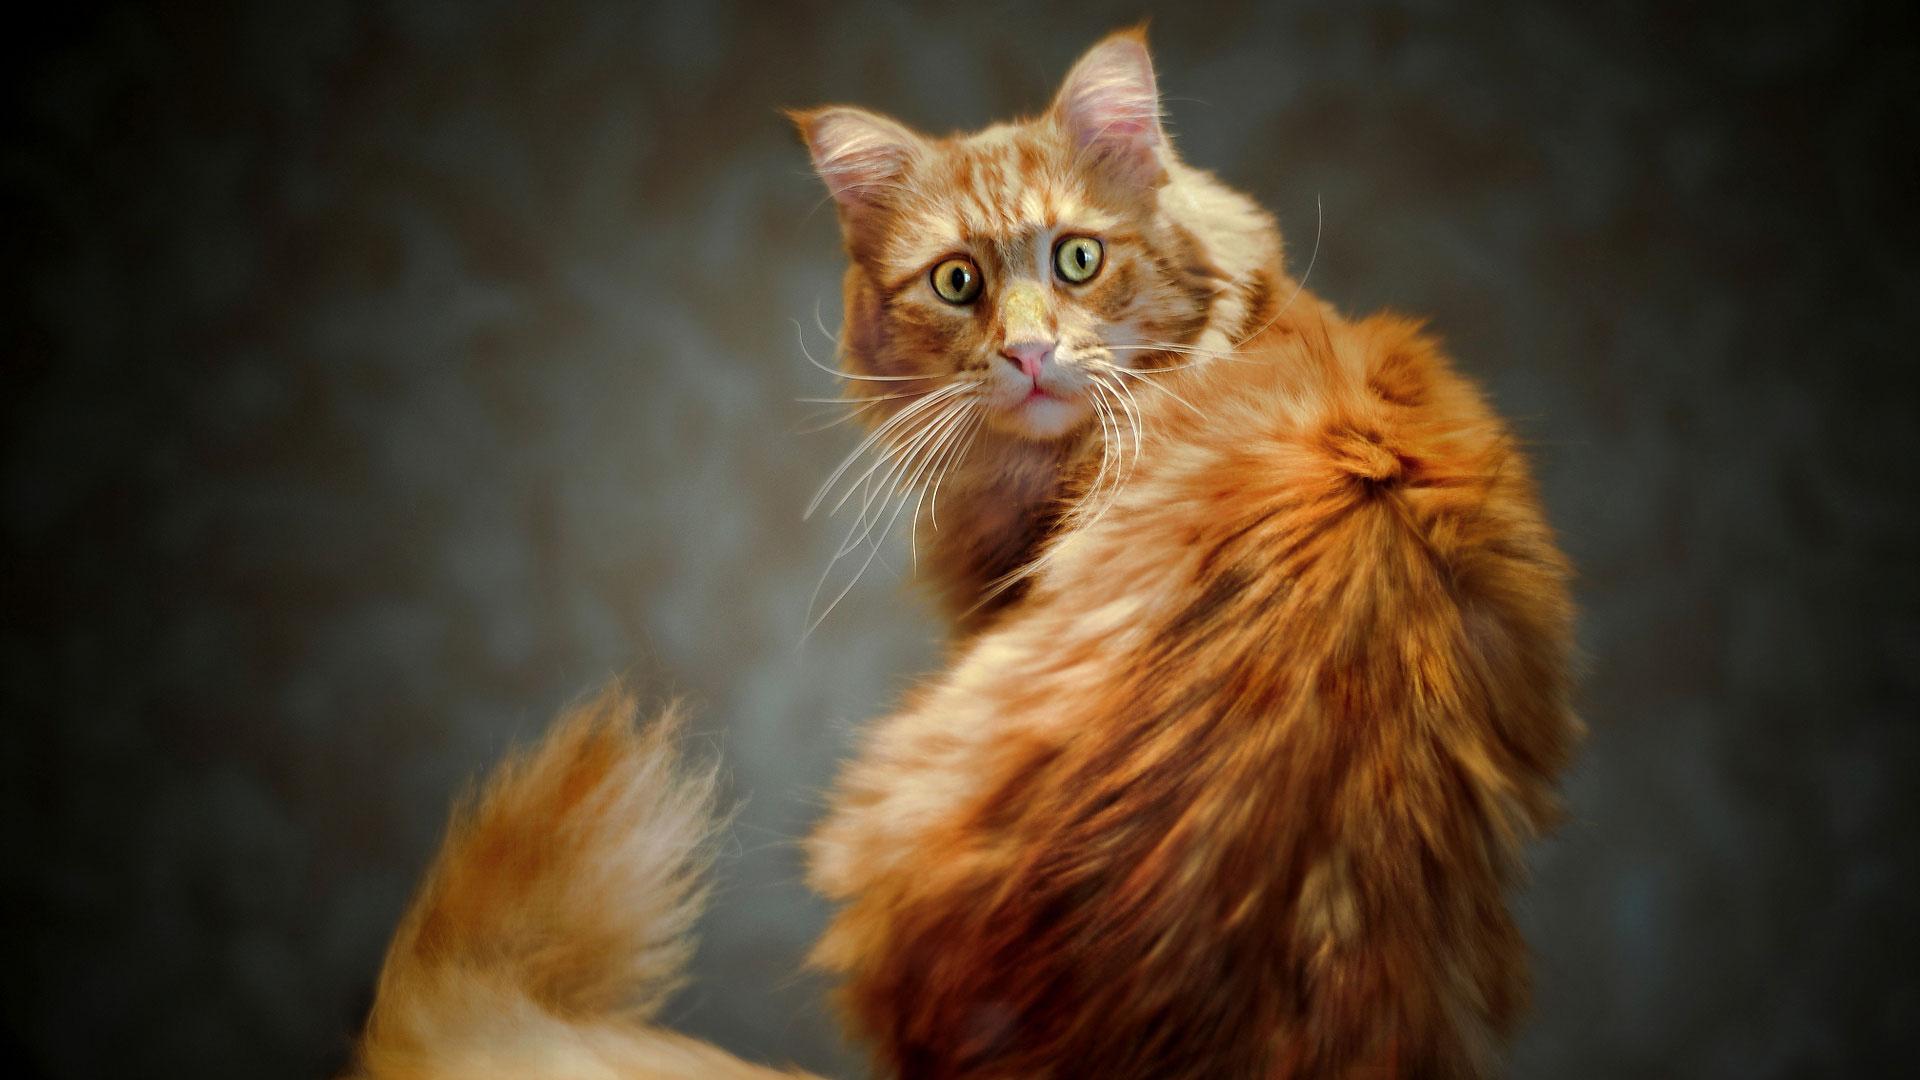 Кошка Мейн Кун - описание породы, фото, особенности, характер и повадки ...